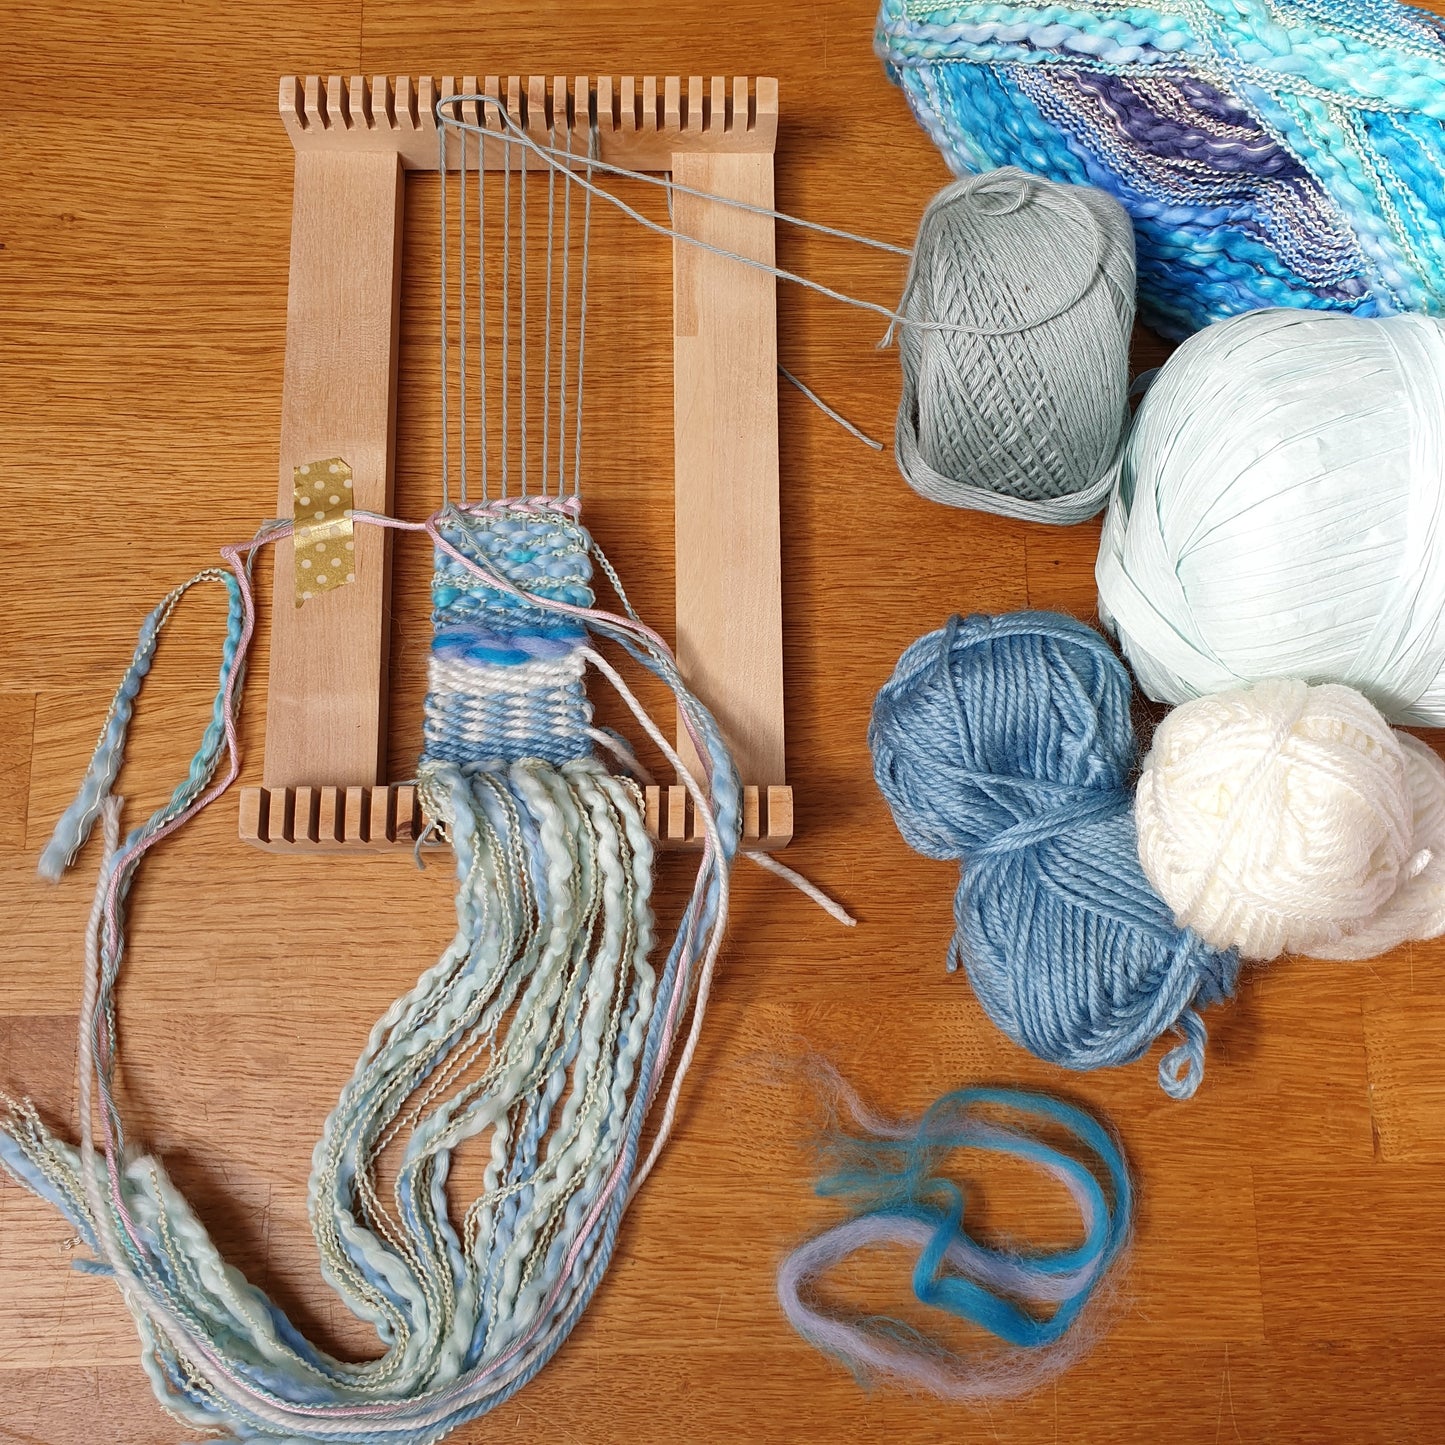 Mini Lap Loom Weaving: #peaceandcraft Workshop Project 2020